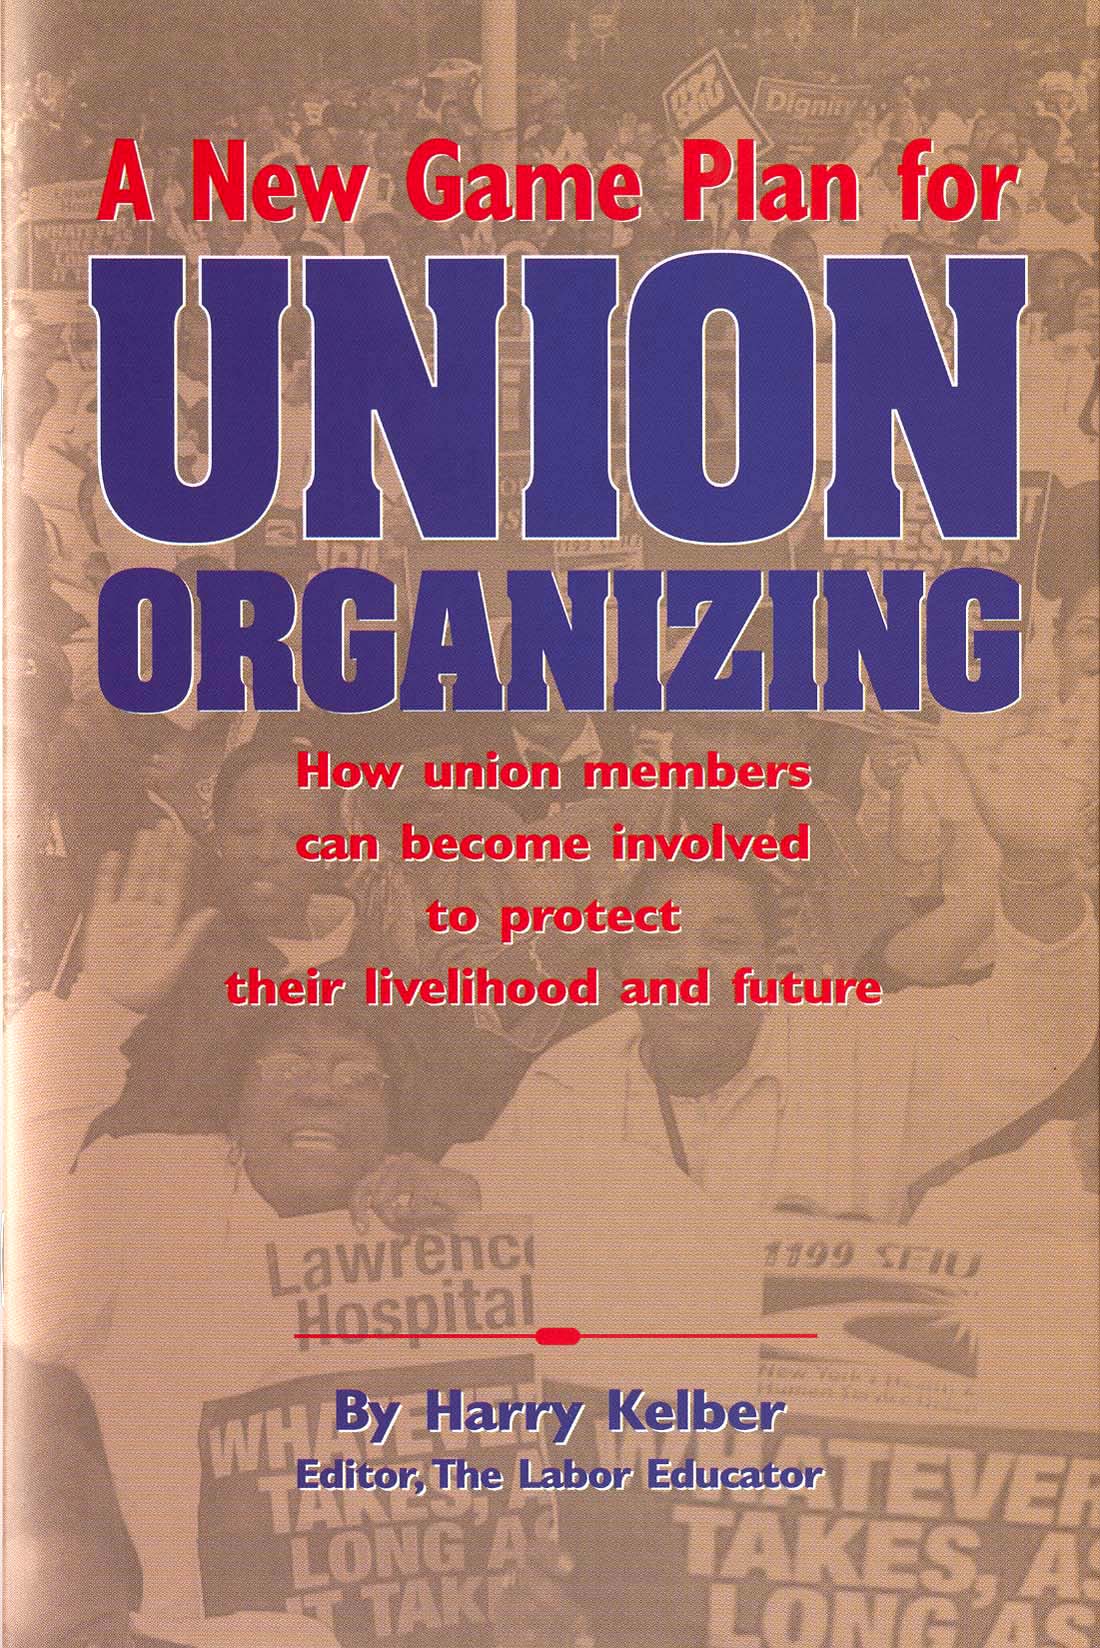 How to get a job as a union organizer